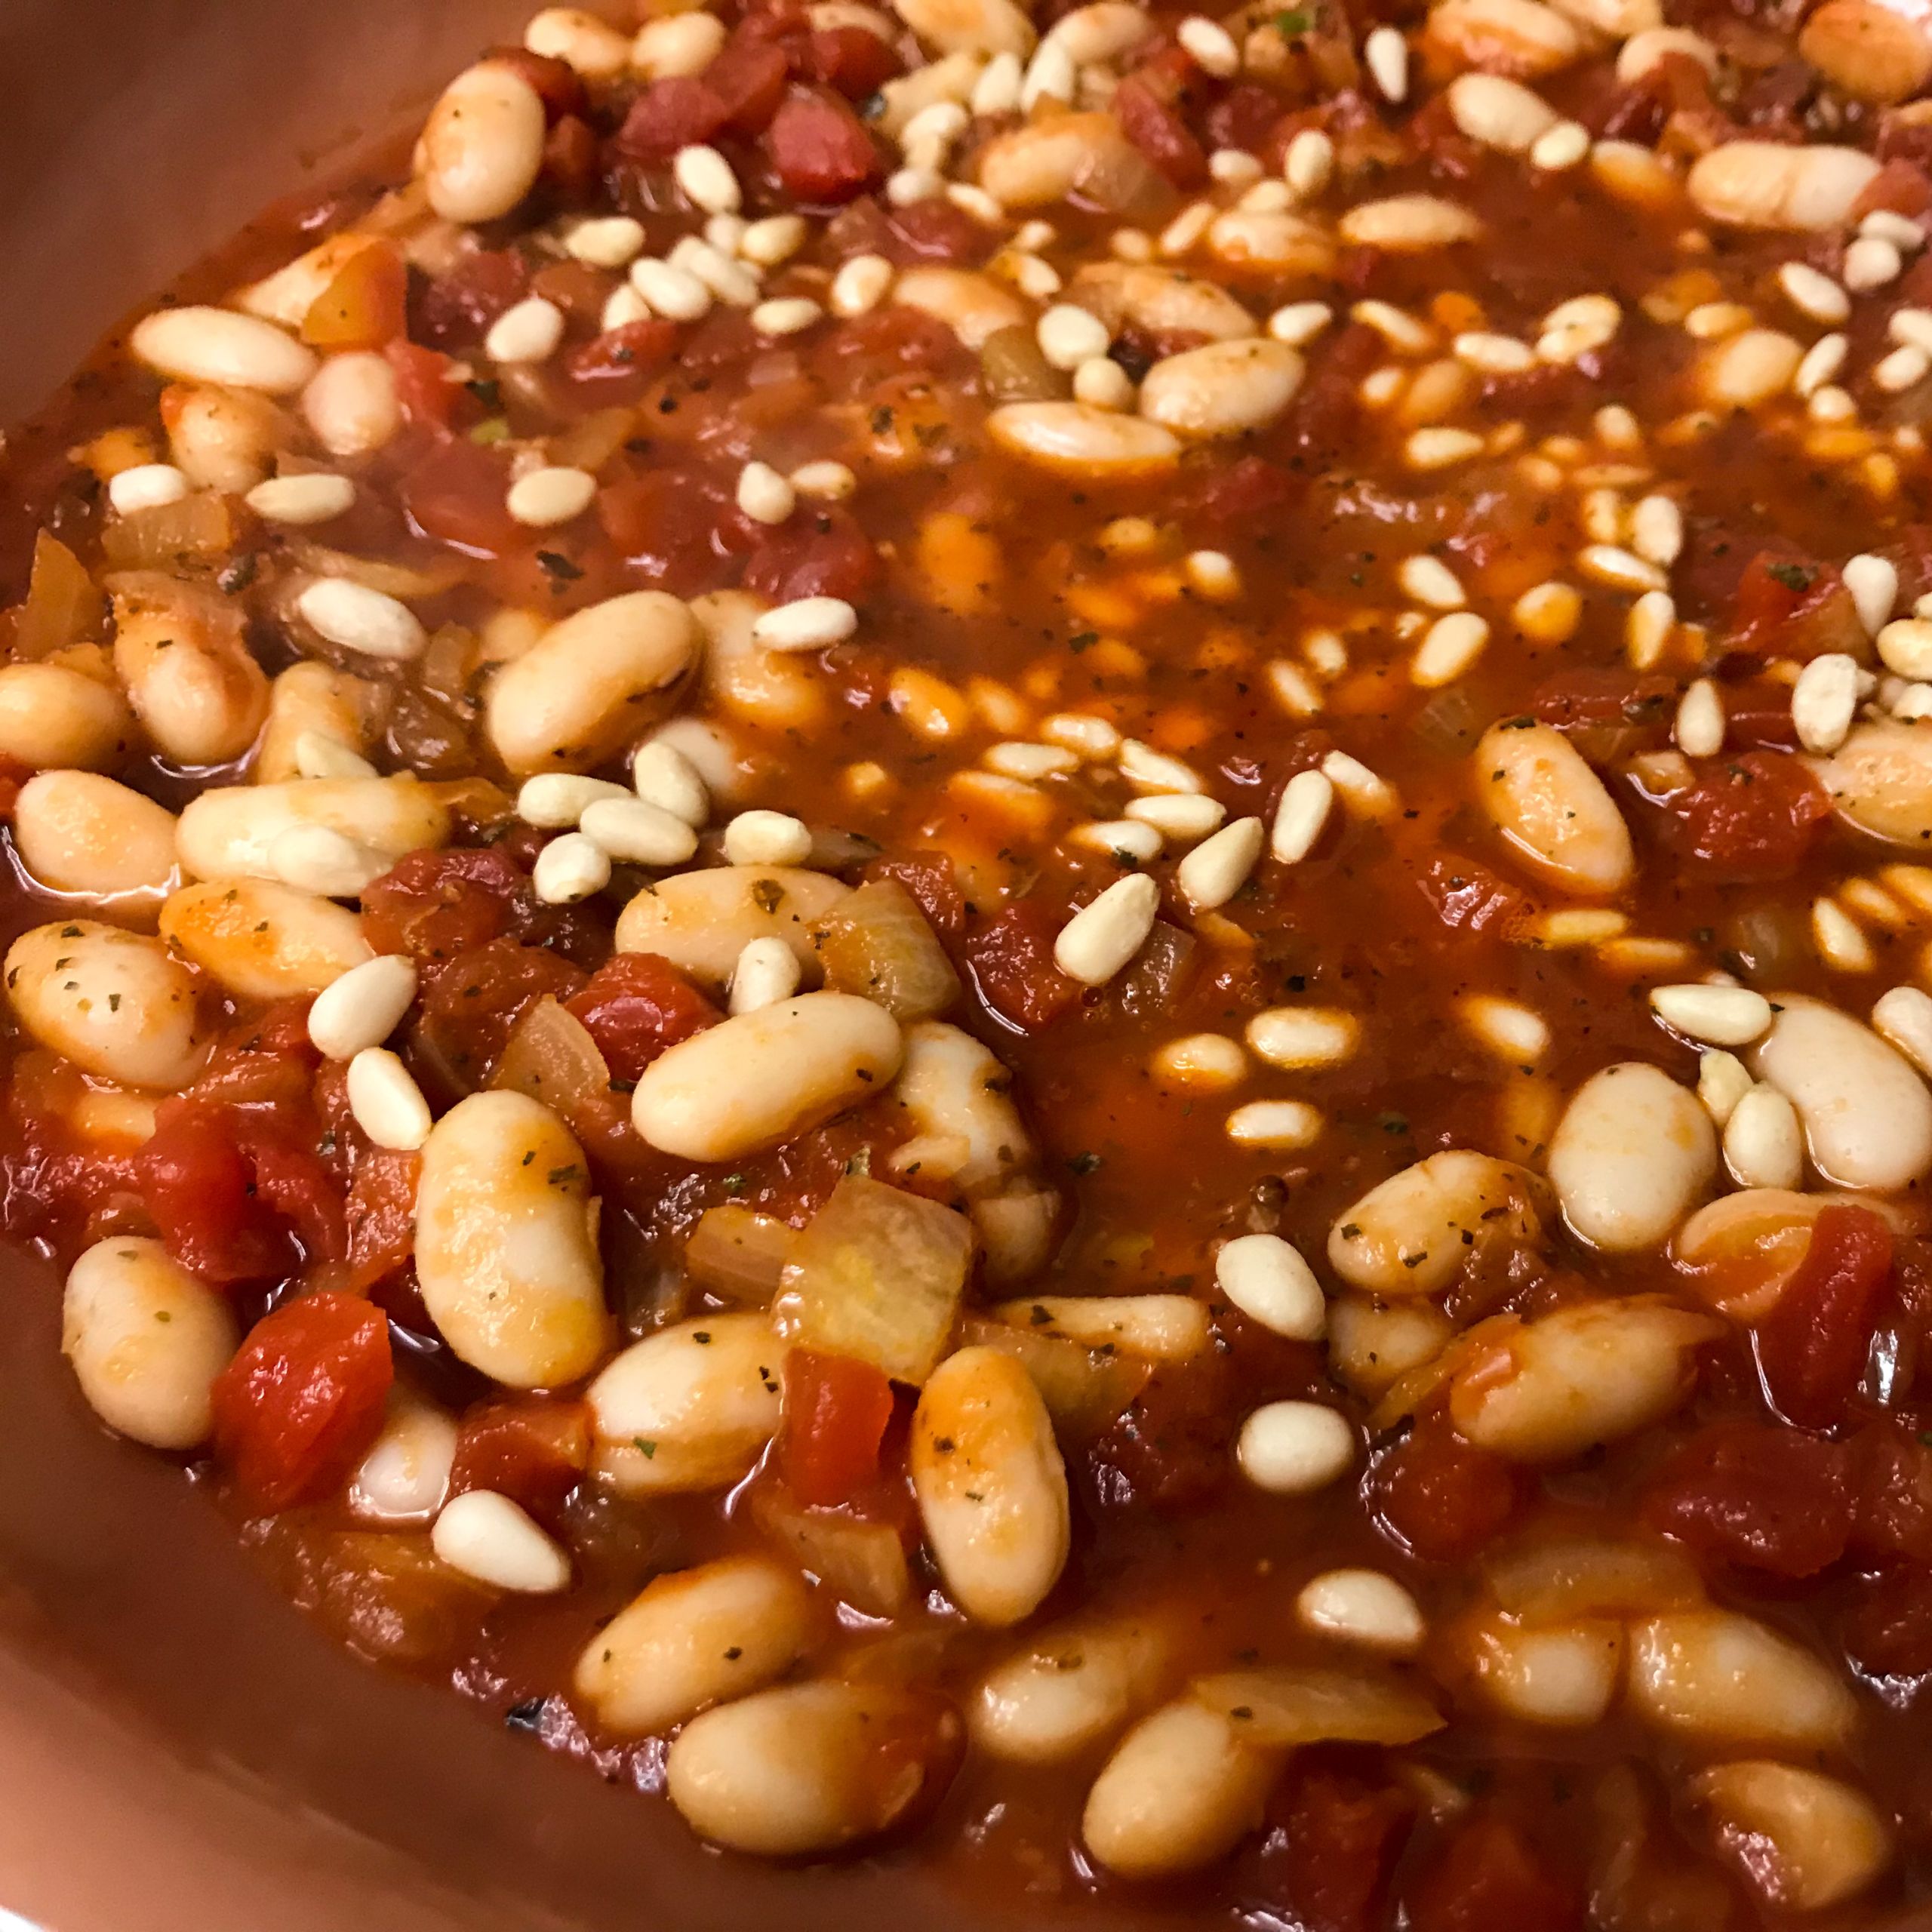 pignoli nuts in bean mixture | my curated tastes